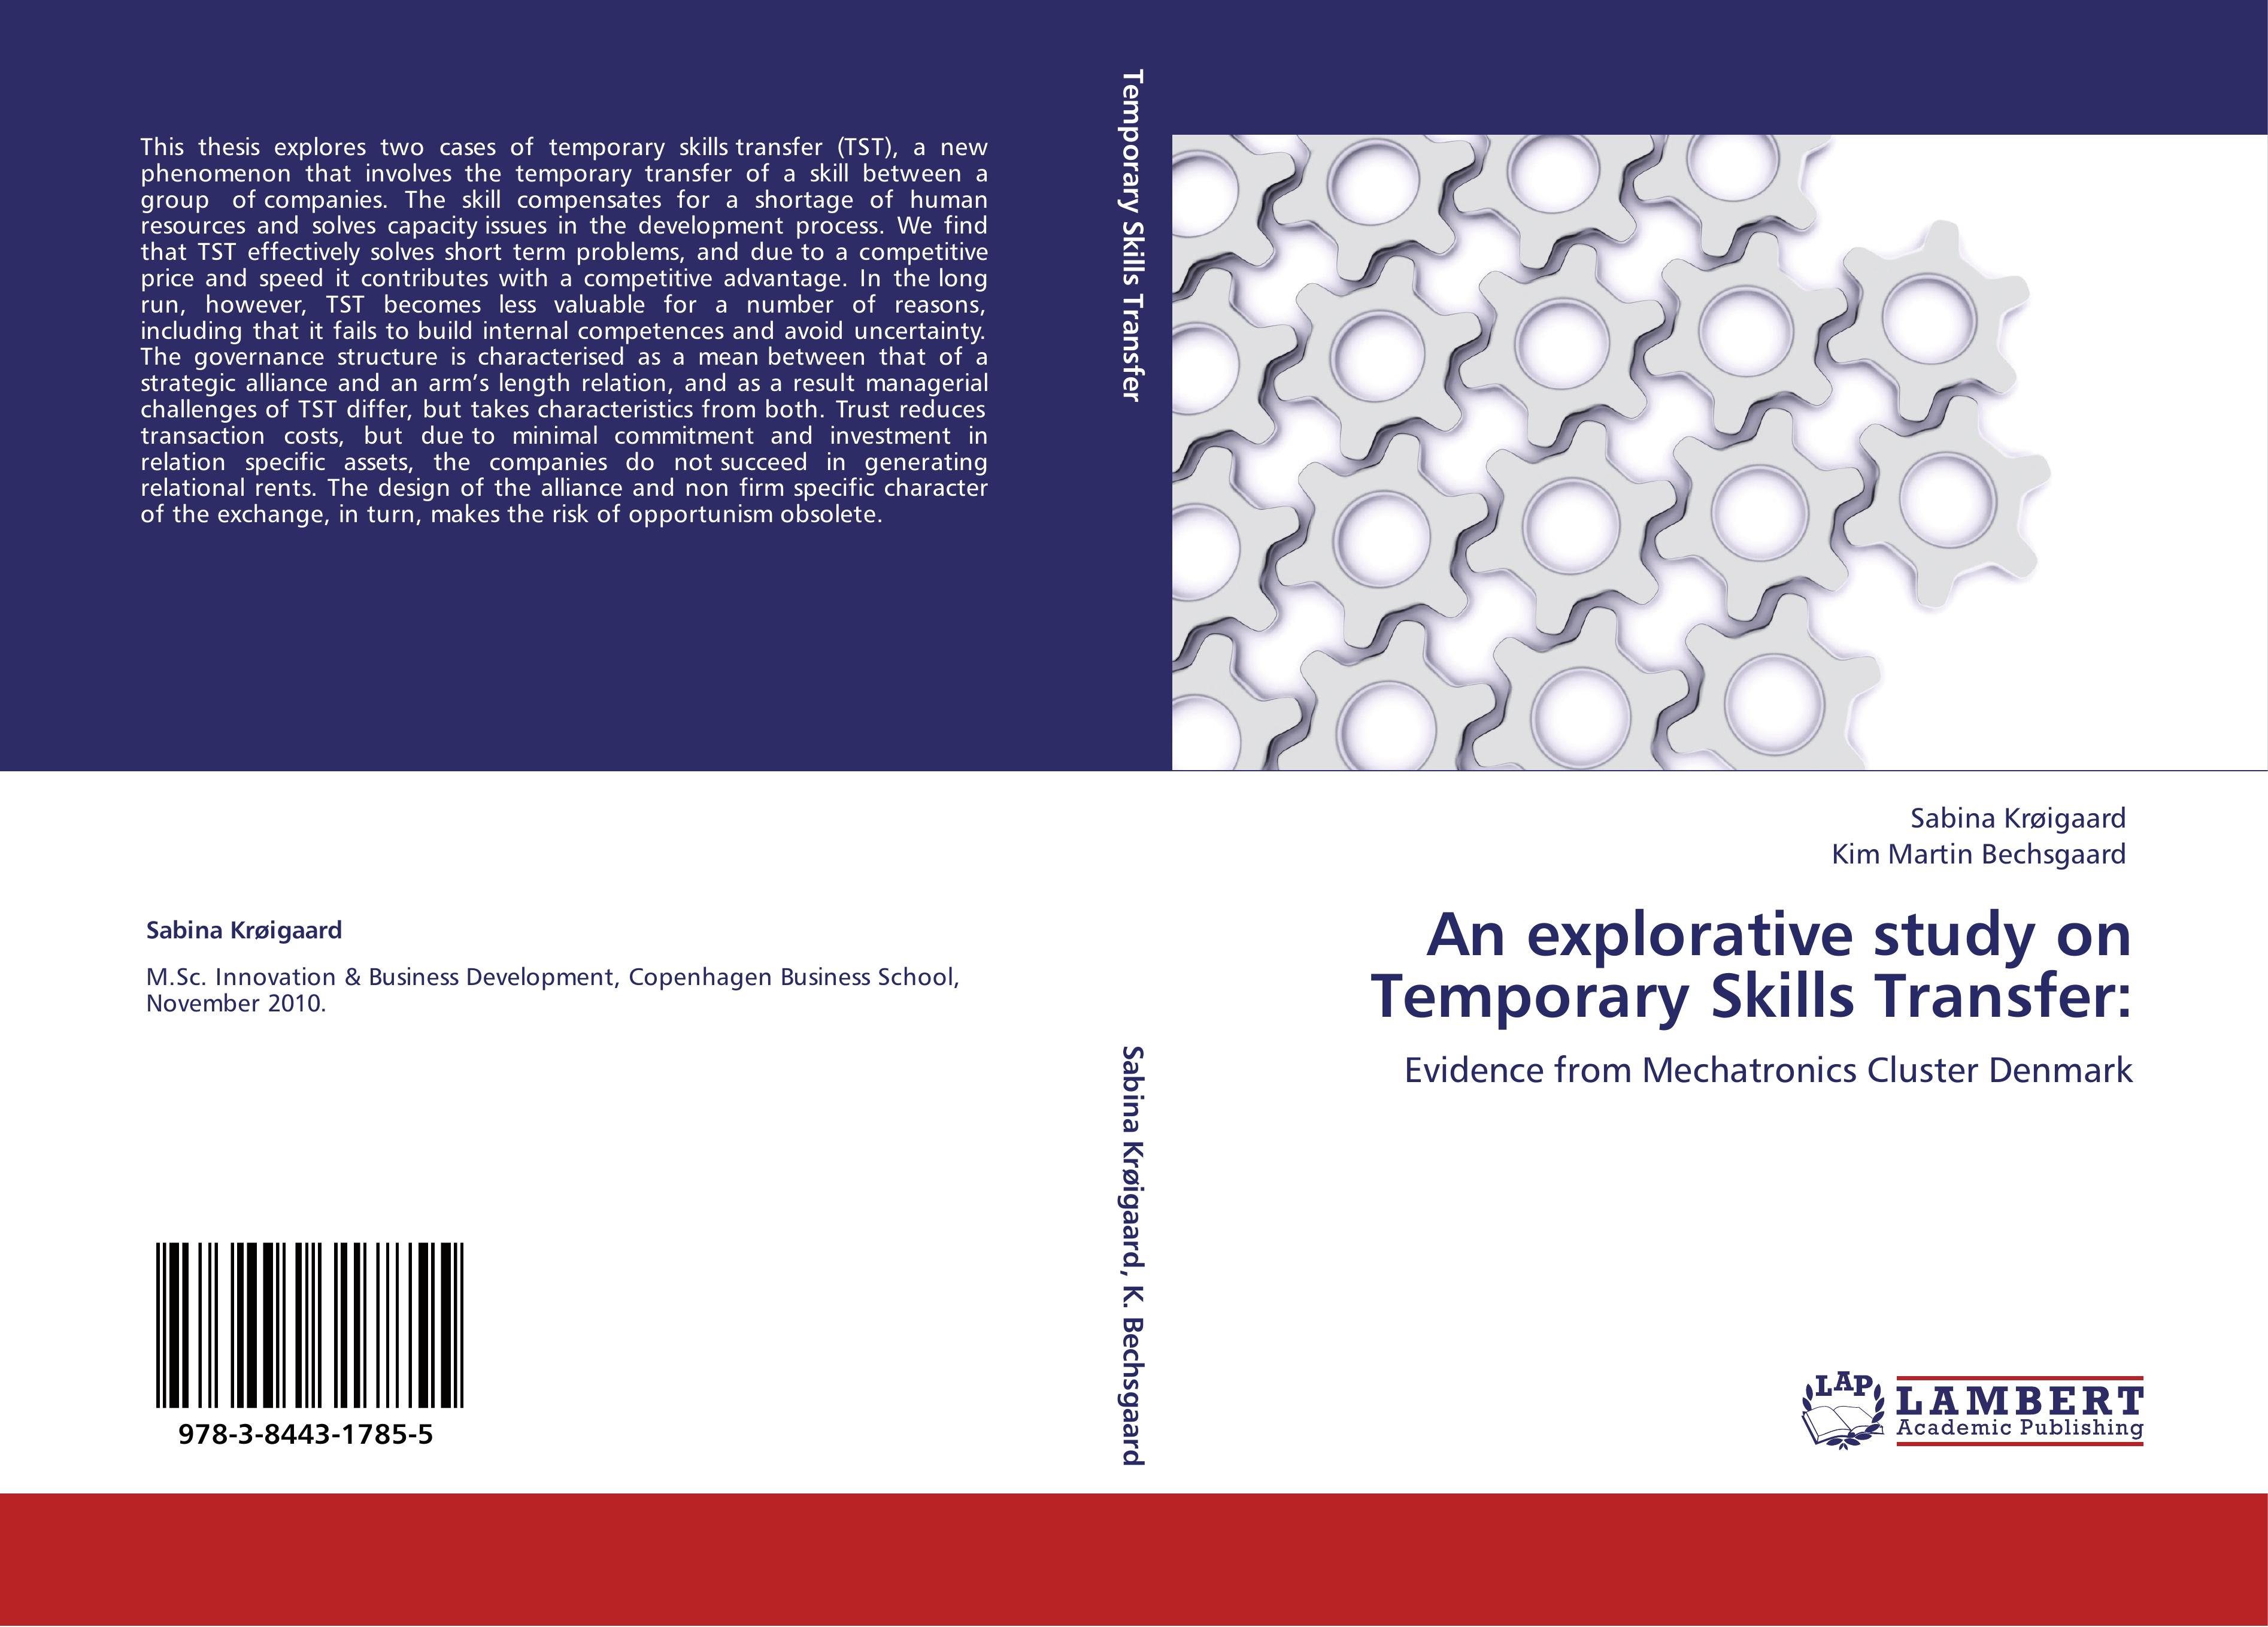 An explorative study on Temporary Skills Transfer - Sabina Krøigaard Kim Martin Bechsgaard